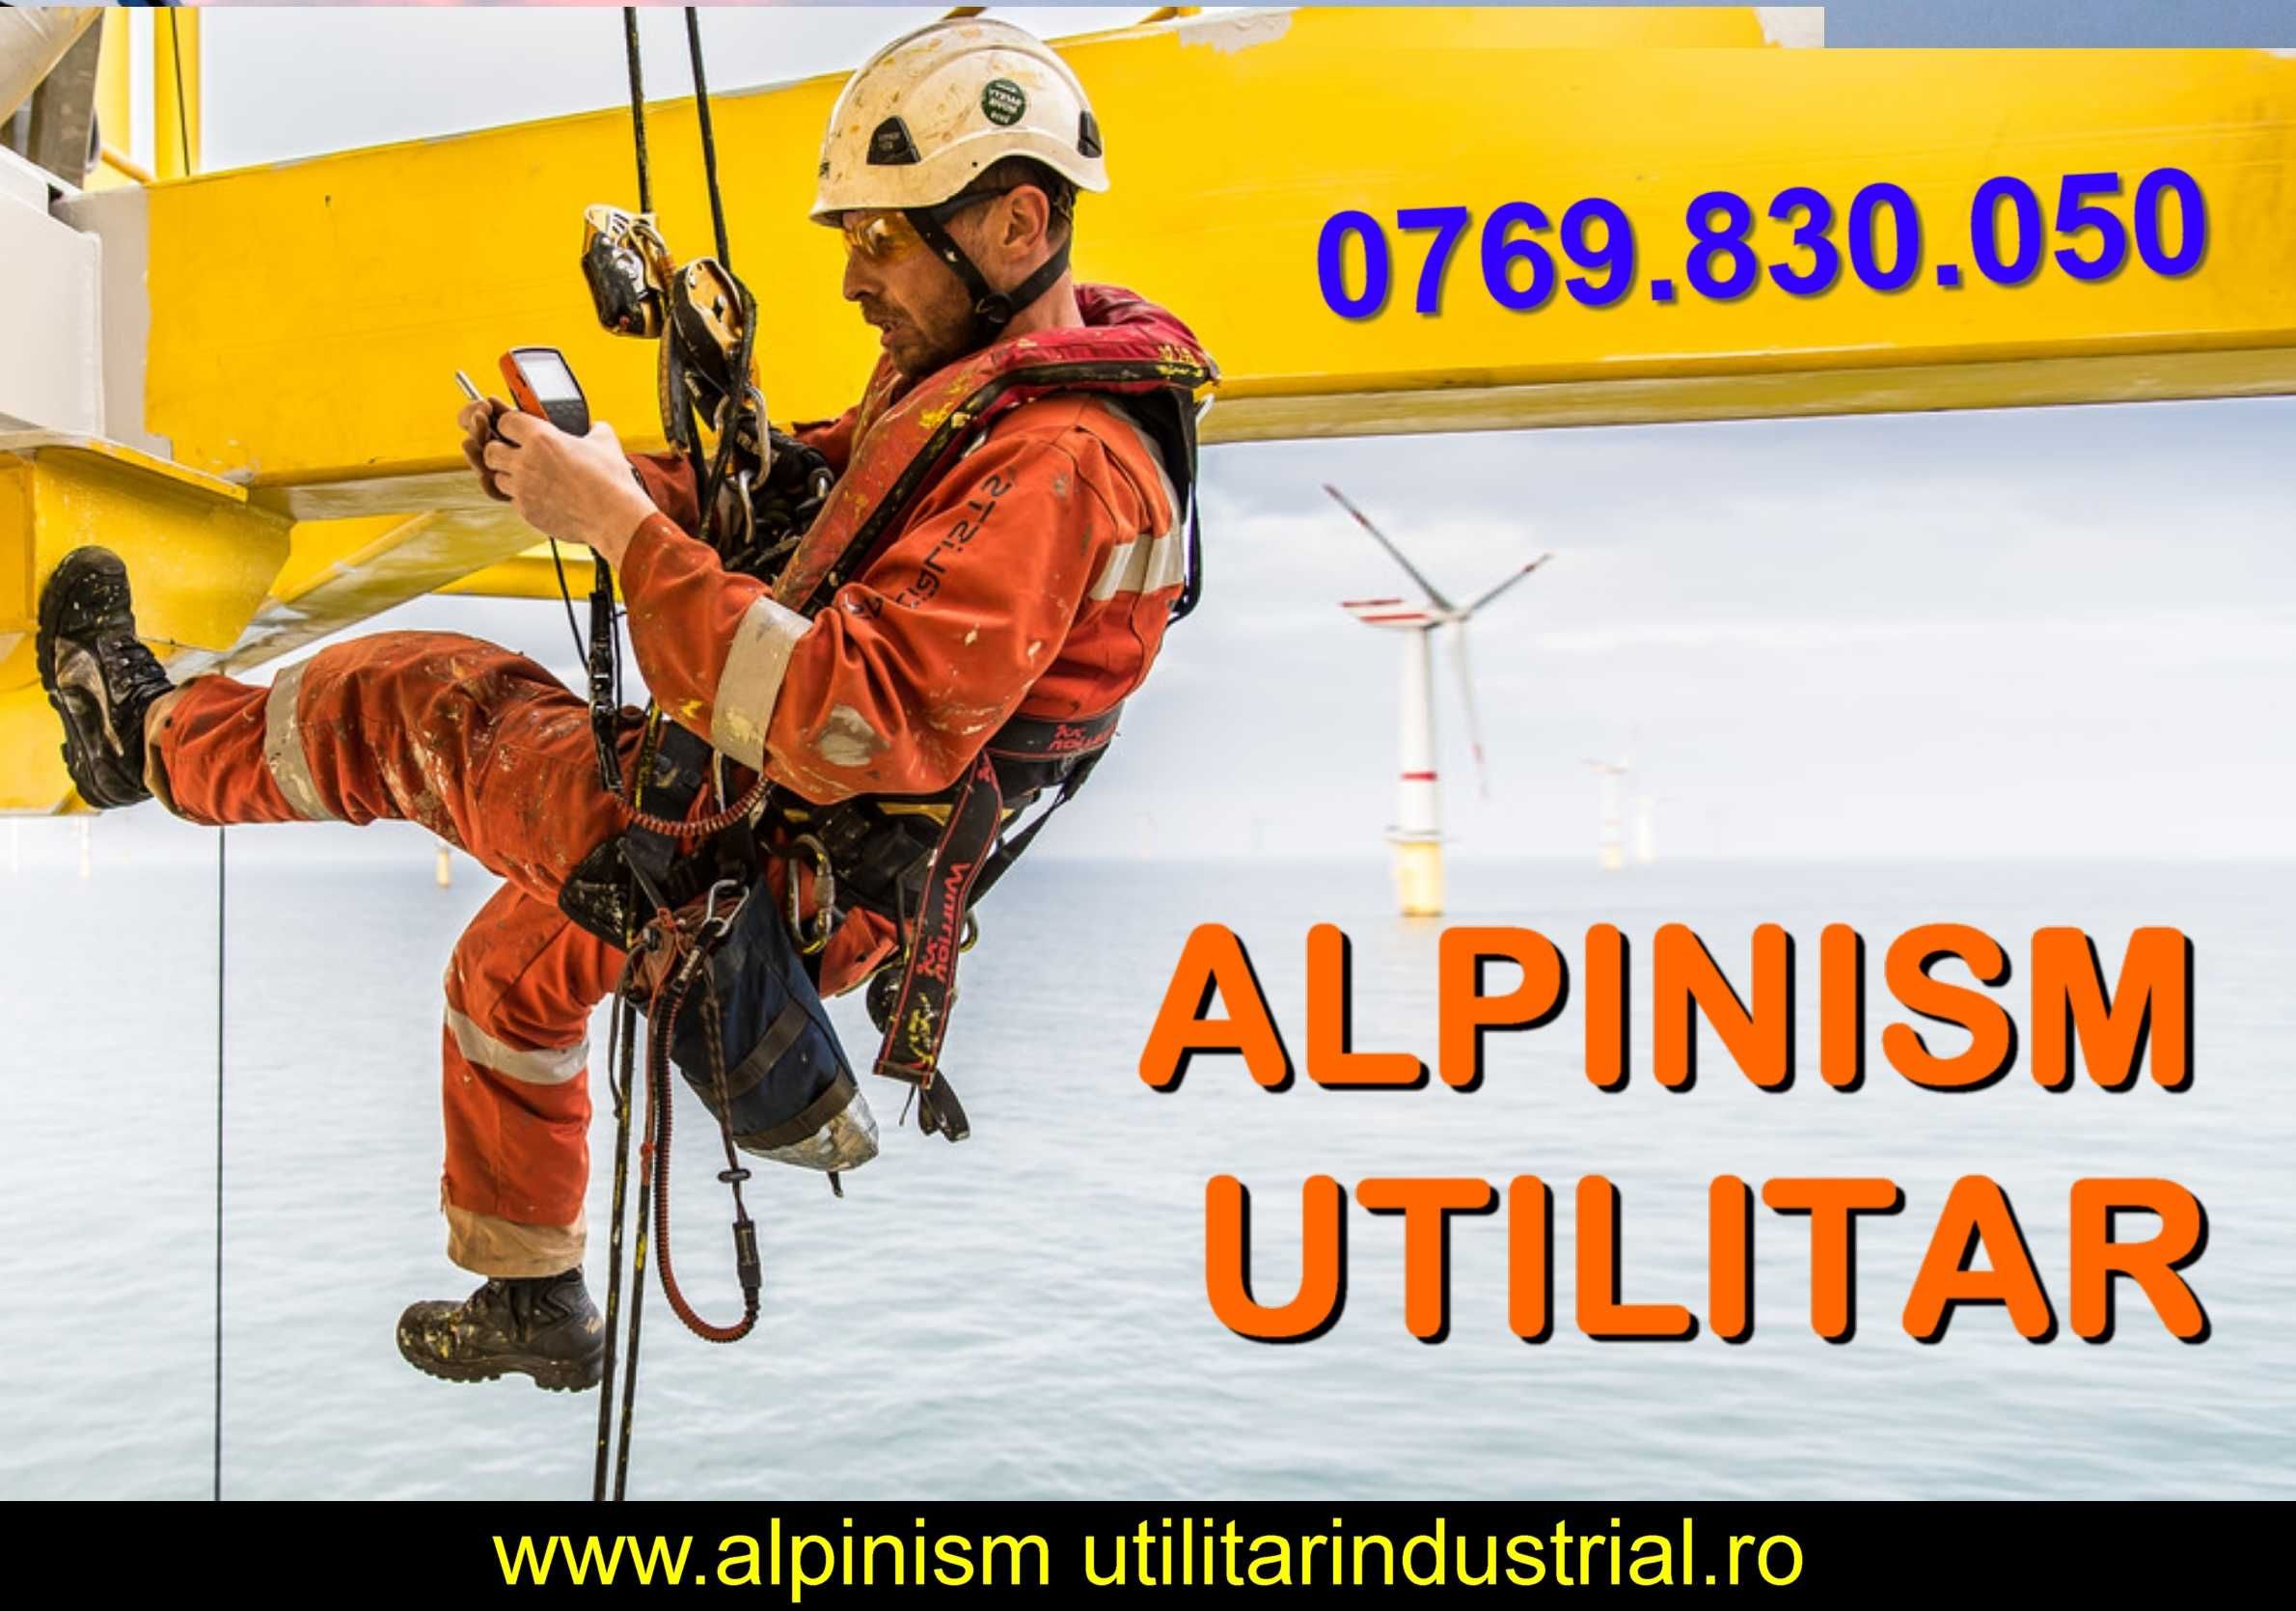 Alpinism utilitar servicii diverse